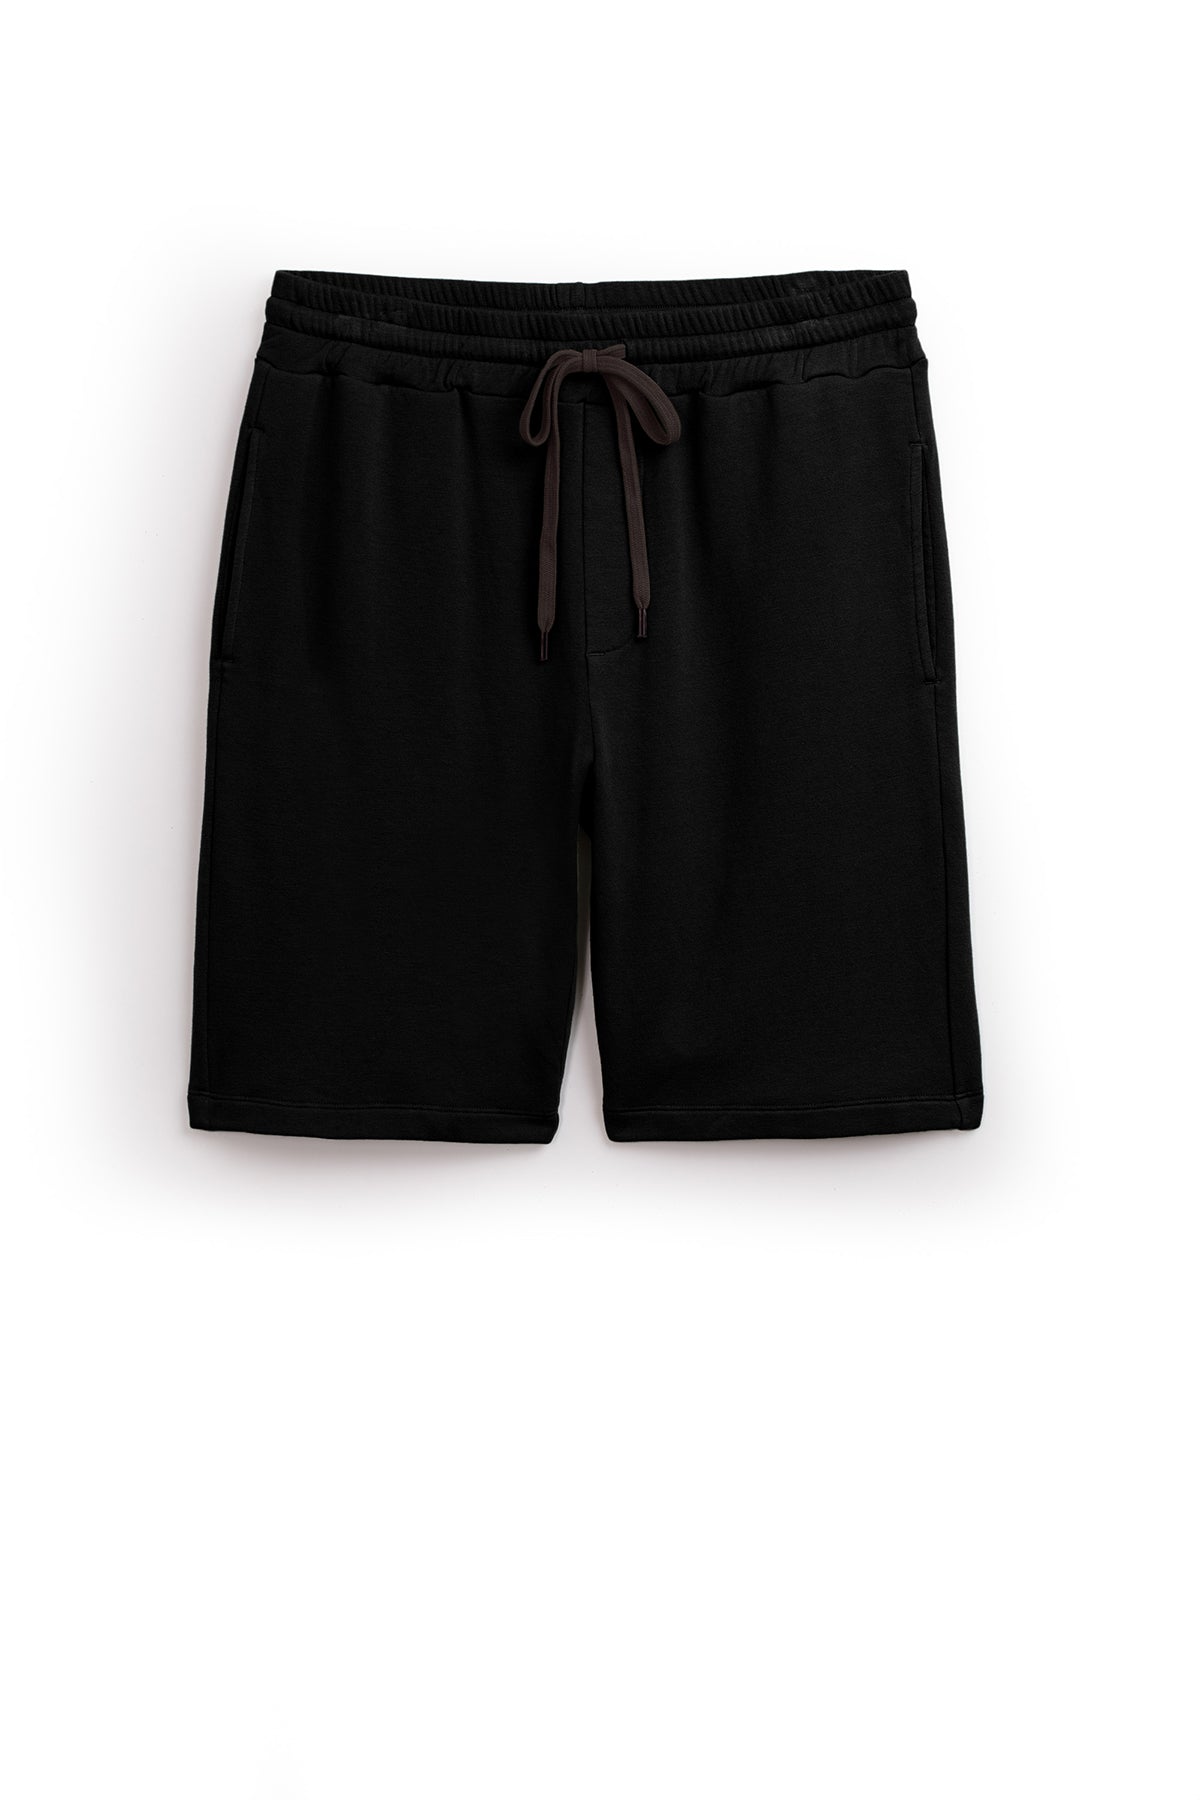 A Velvet by Graham & Spencer men's ATLAS LUXE FLEECE DRAWSTRING SHORT sweat shorts with a drawstring.-25578323116225